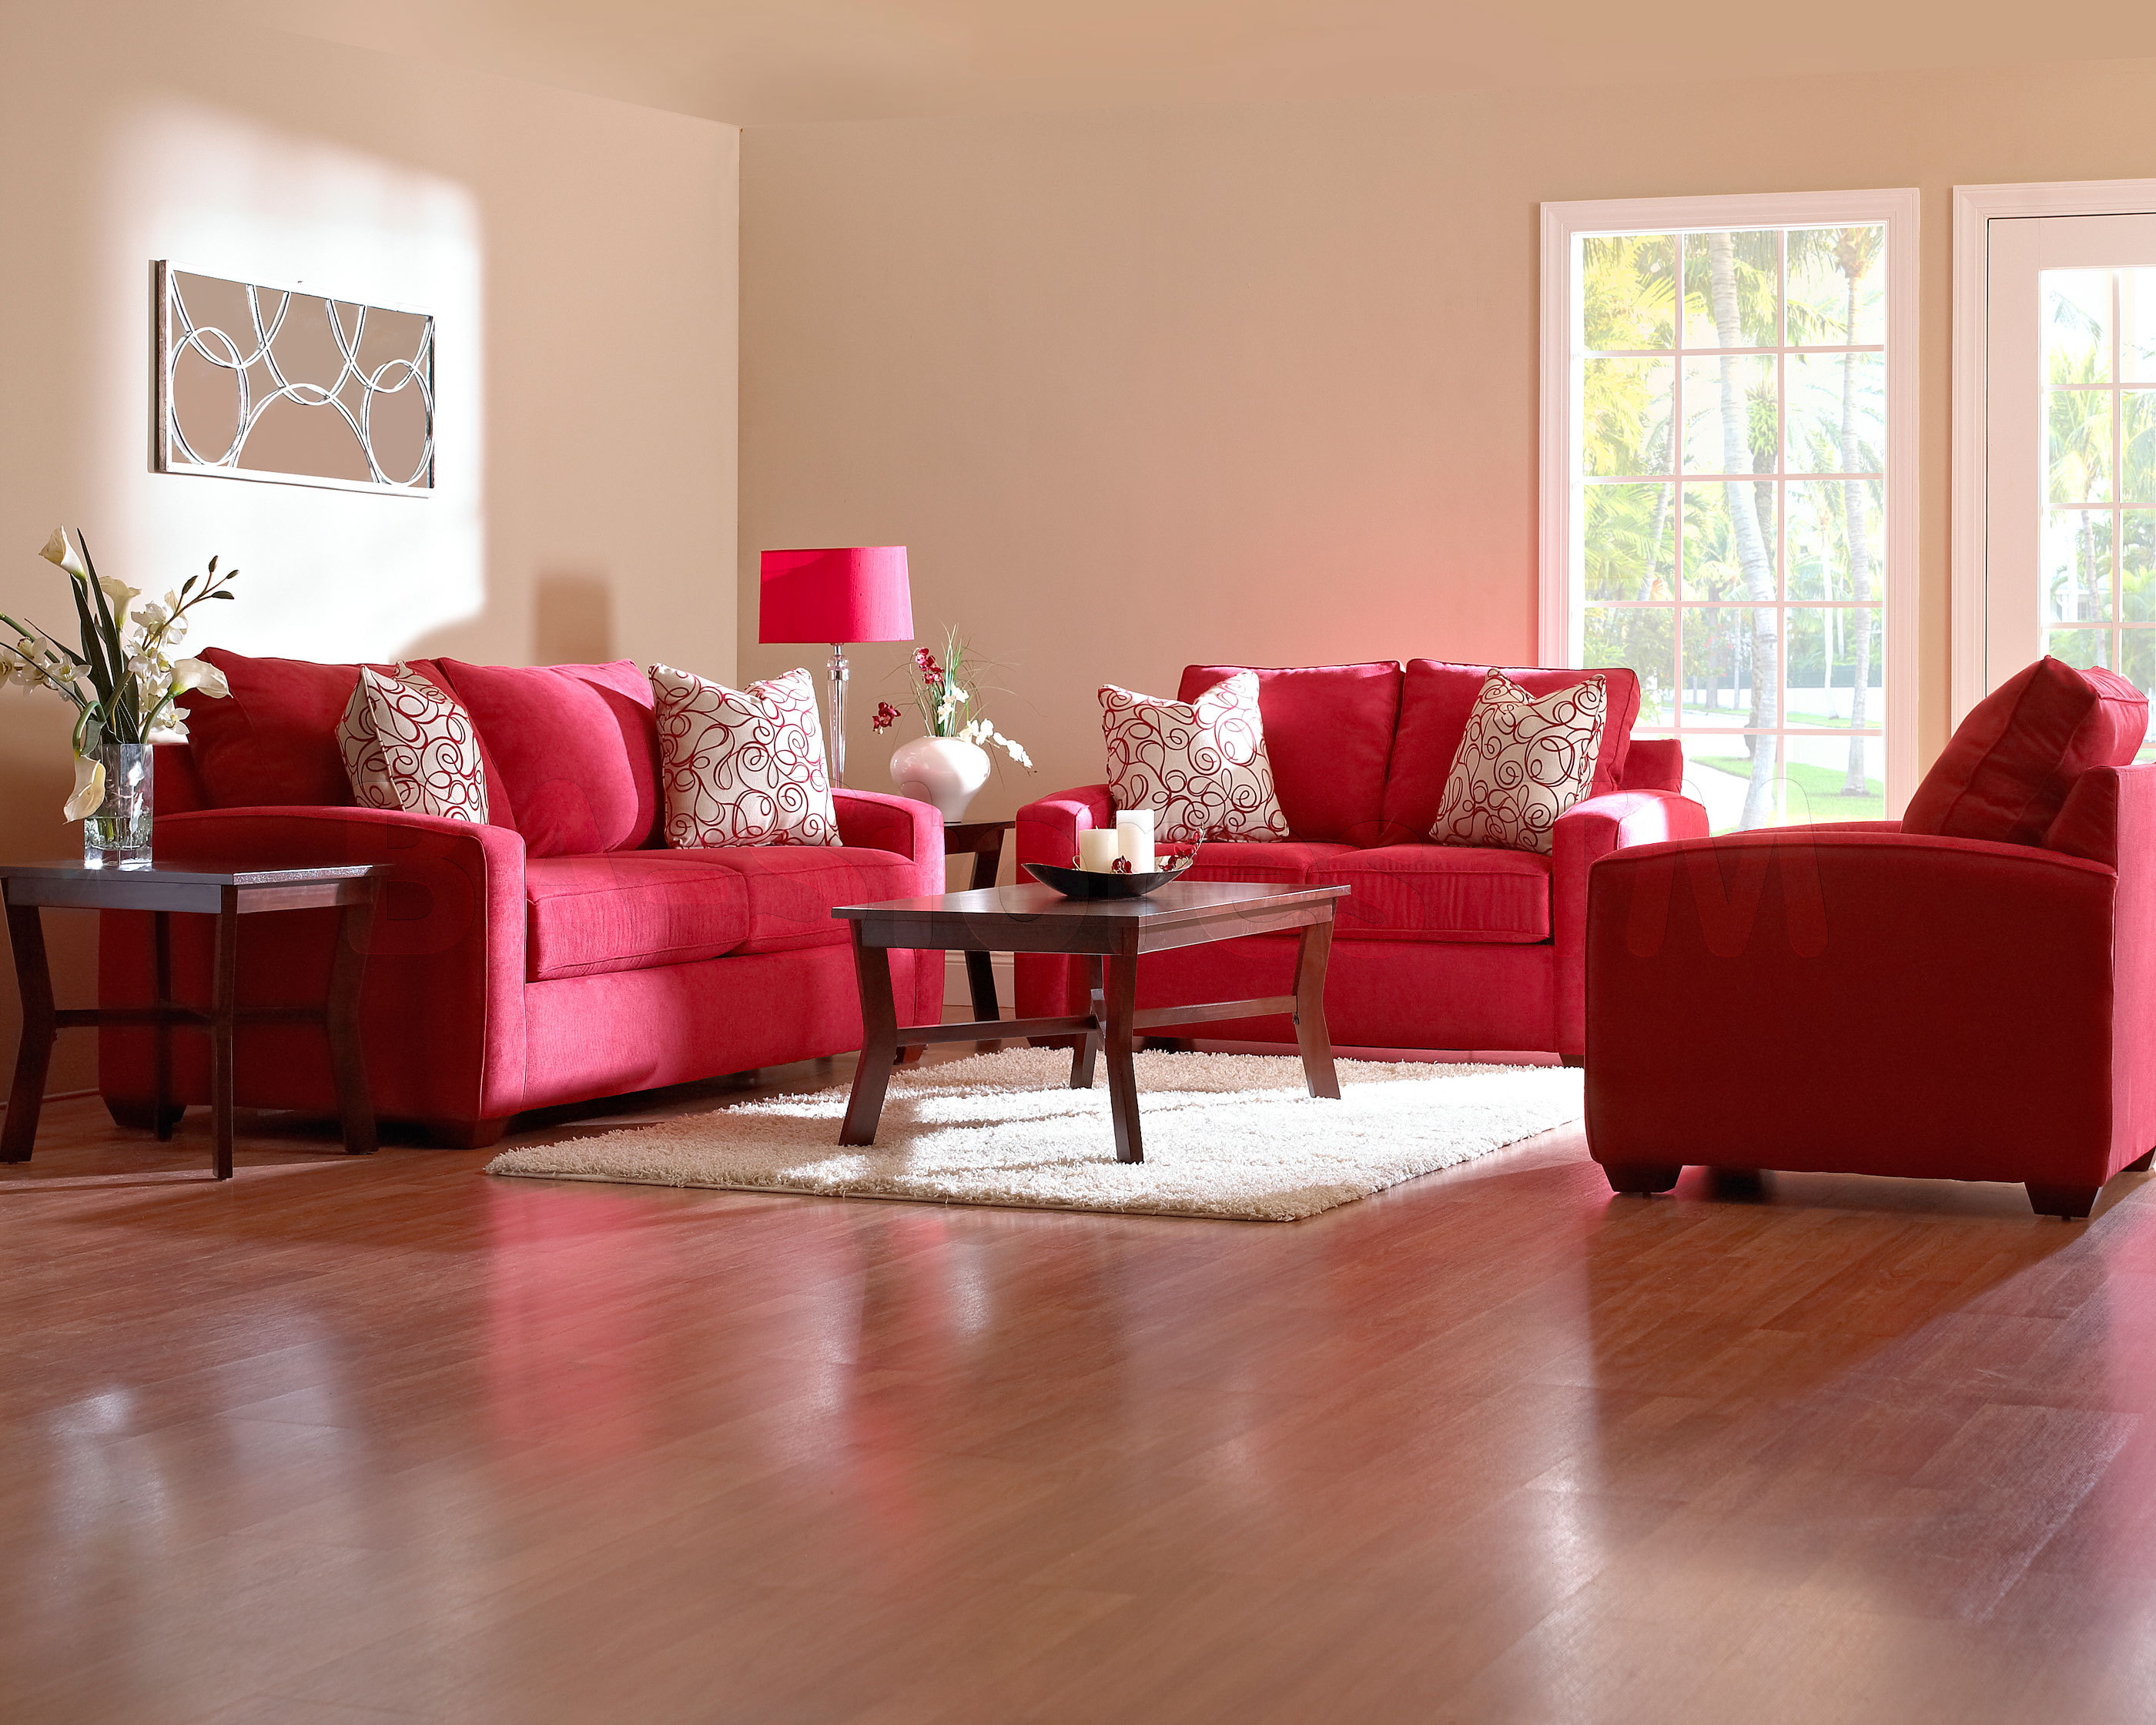 red sofas living room ideas